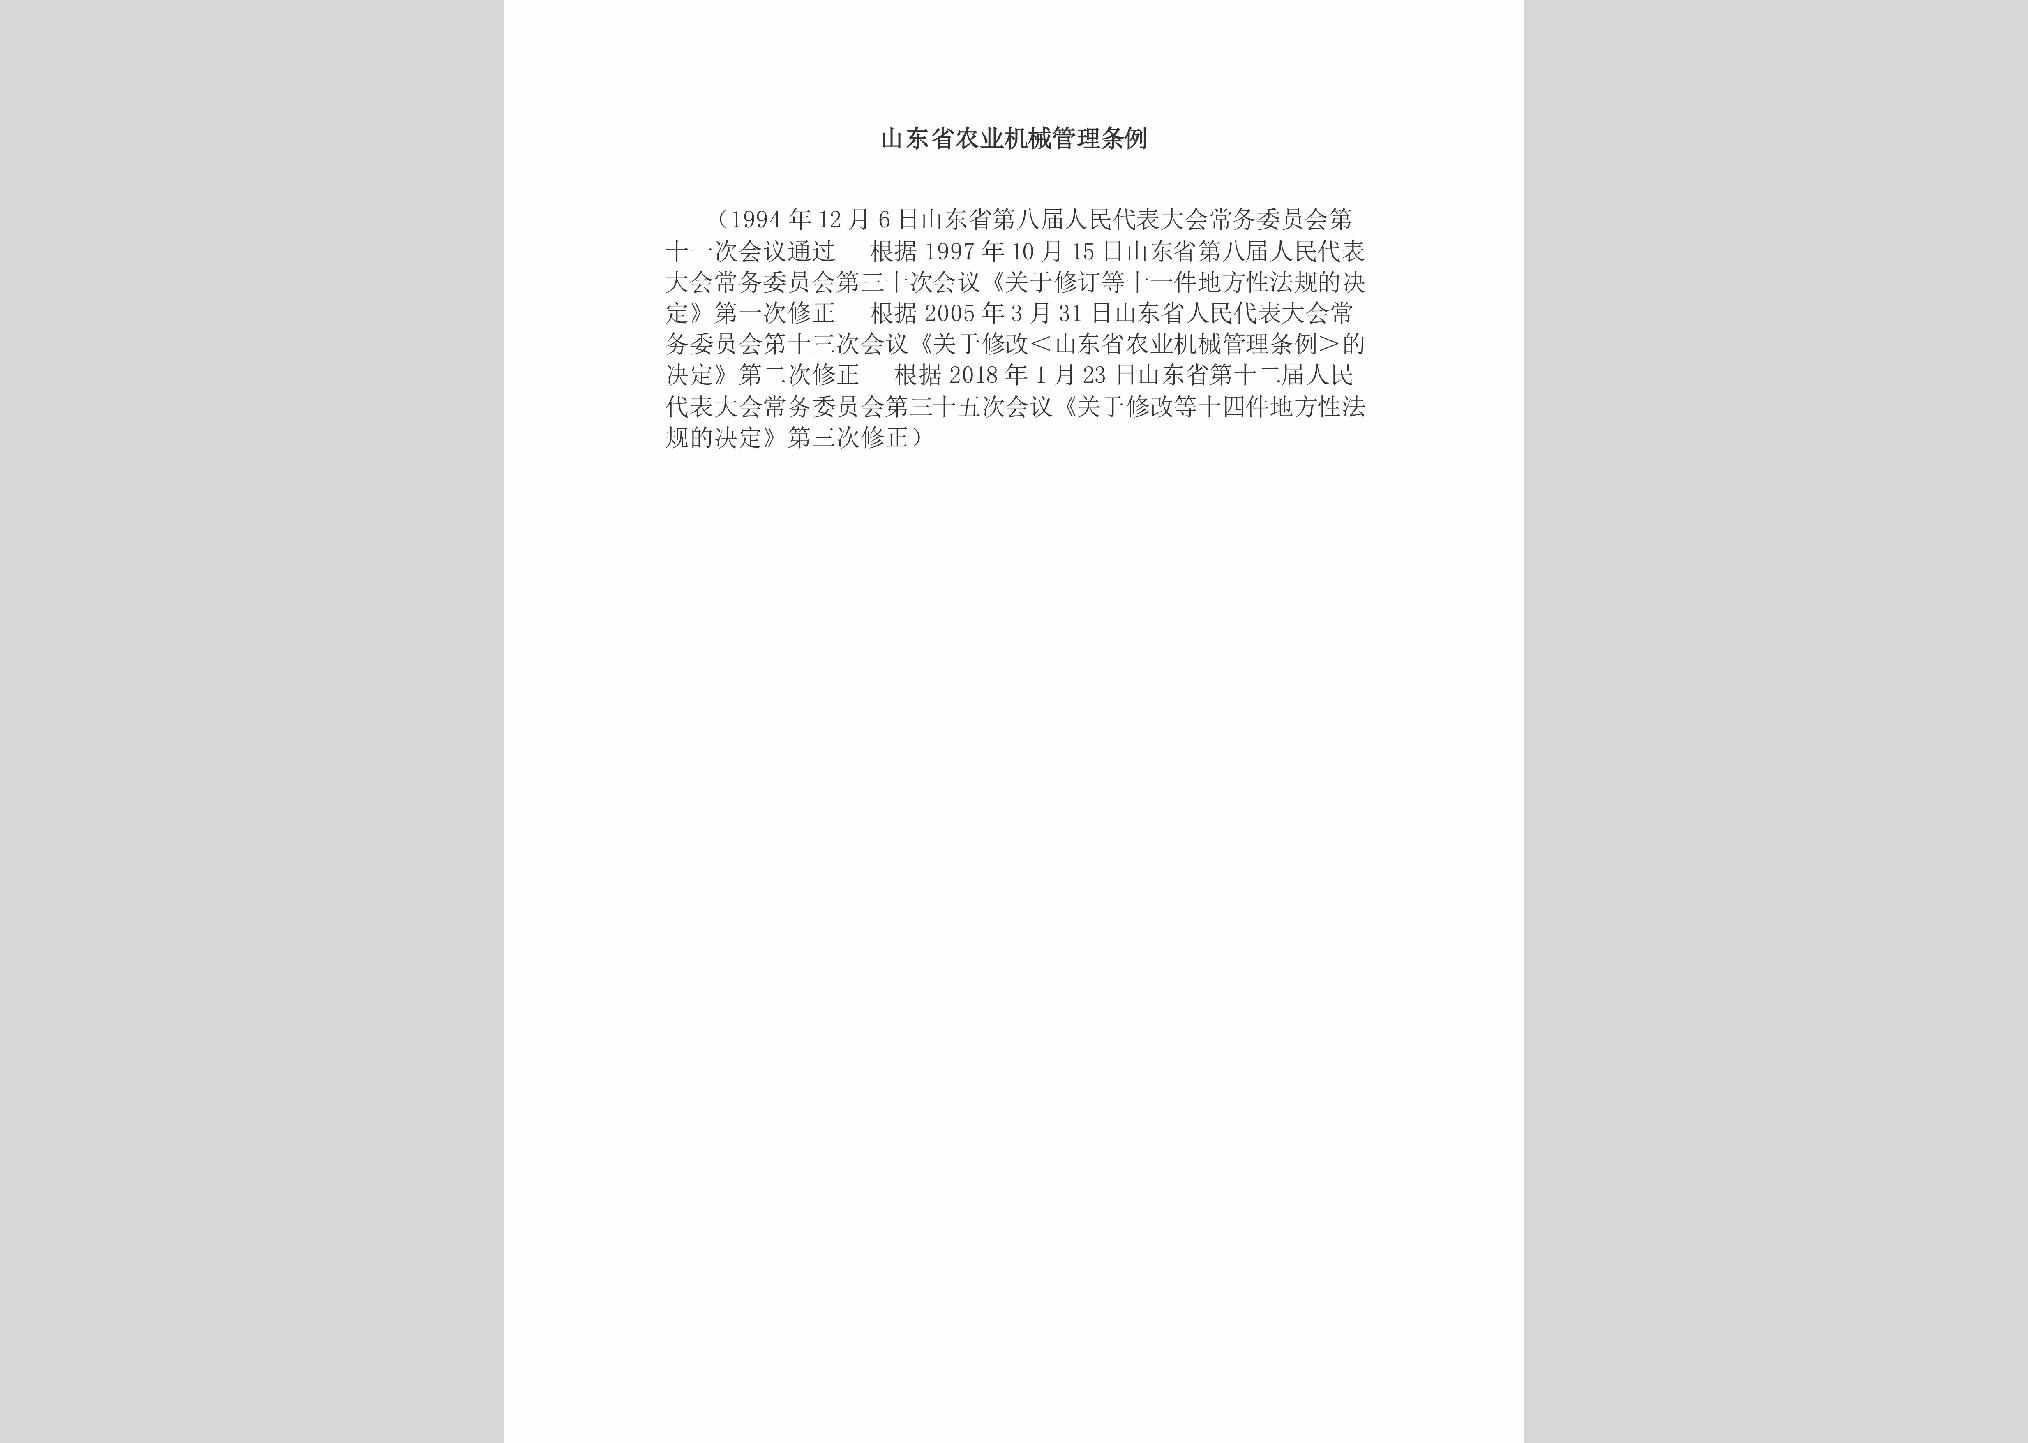 SD-SDSNYJXG-2018：山东省农业机械管理条例